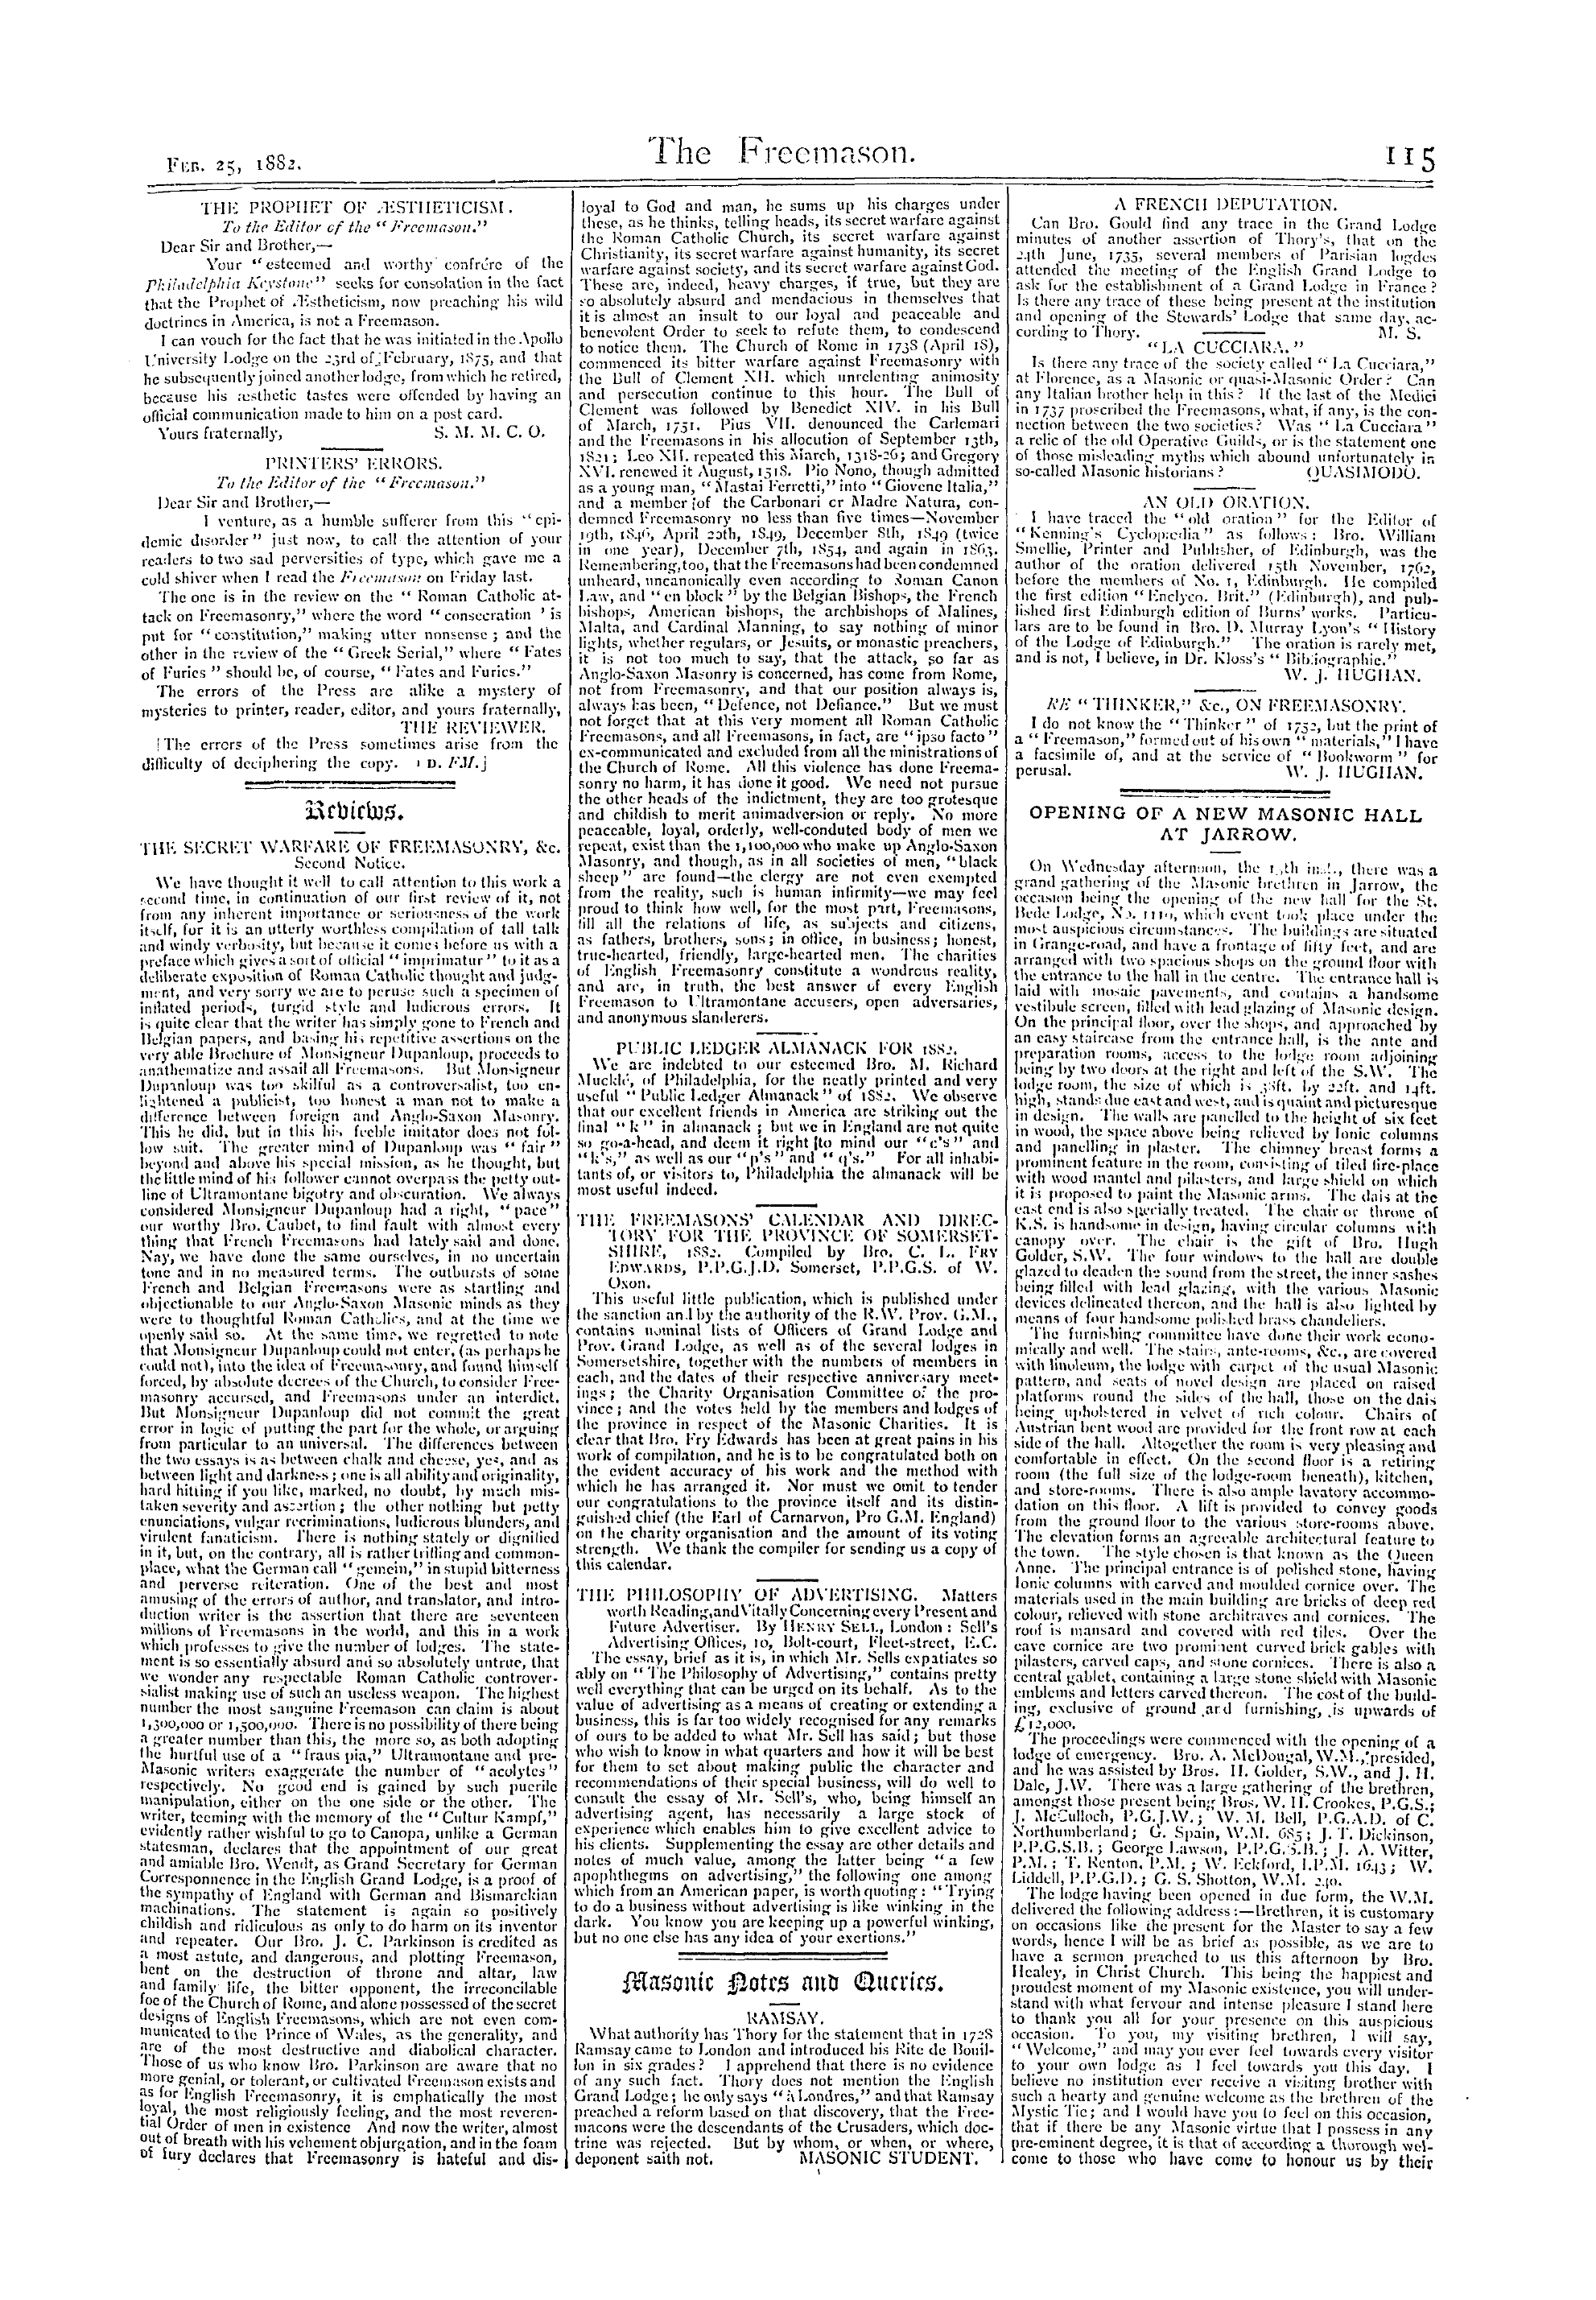 The Freemason: 1882-02-25 - Original Correspondence.